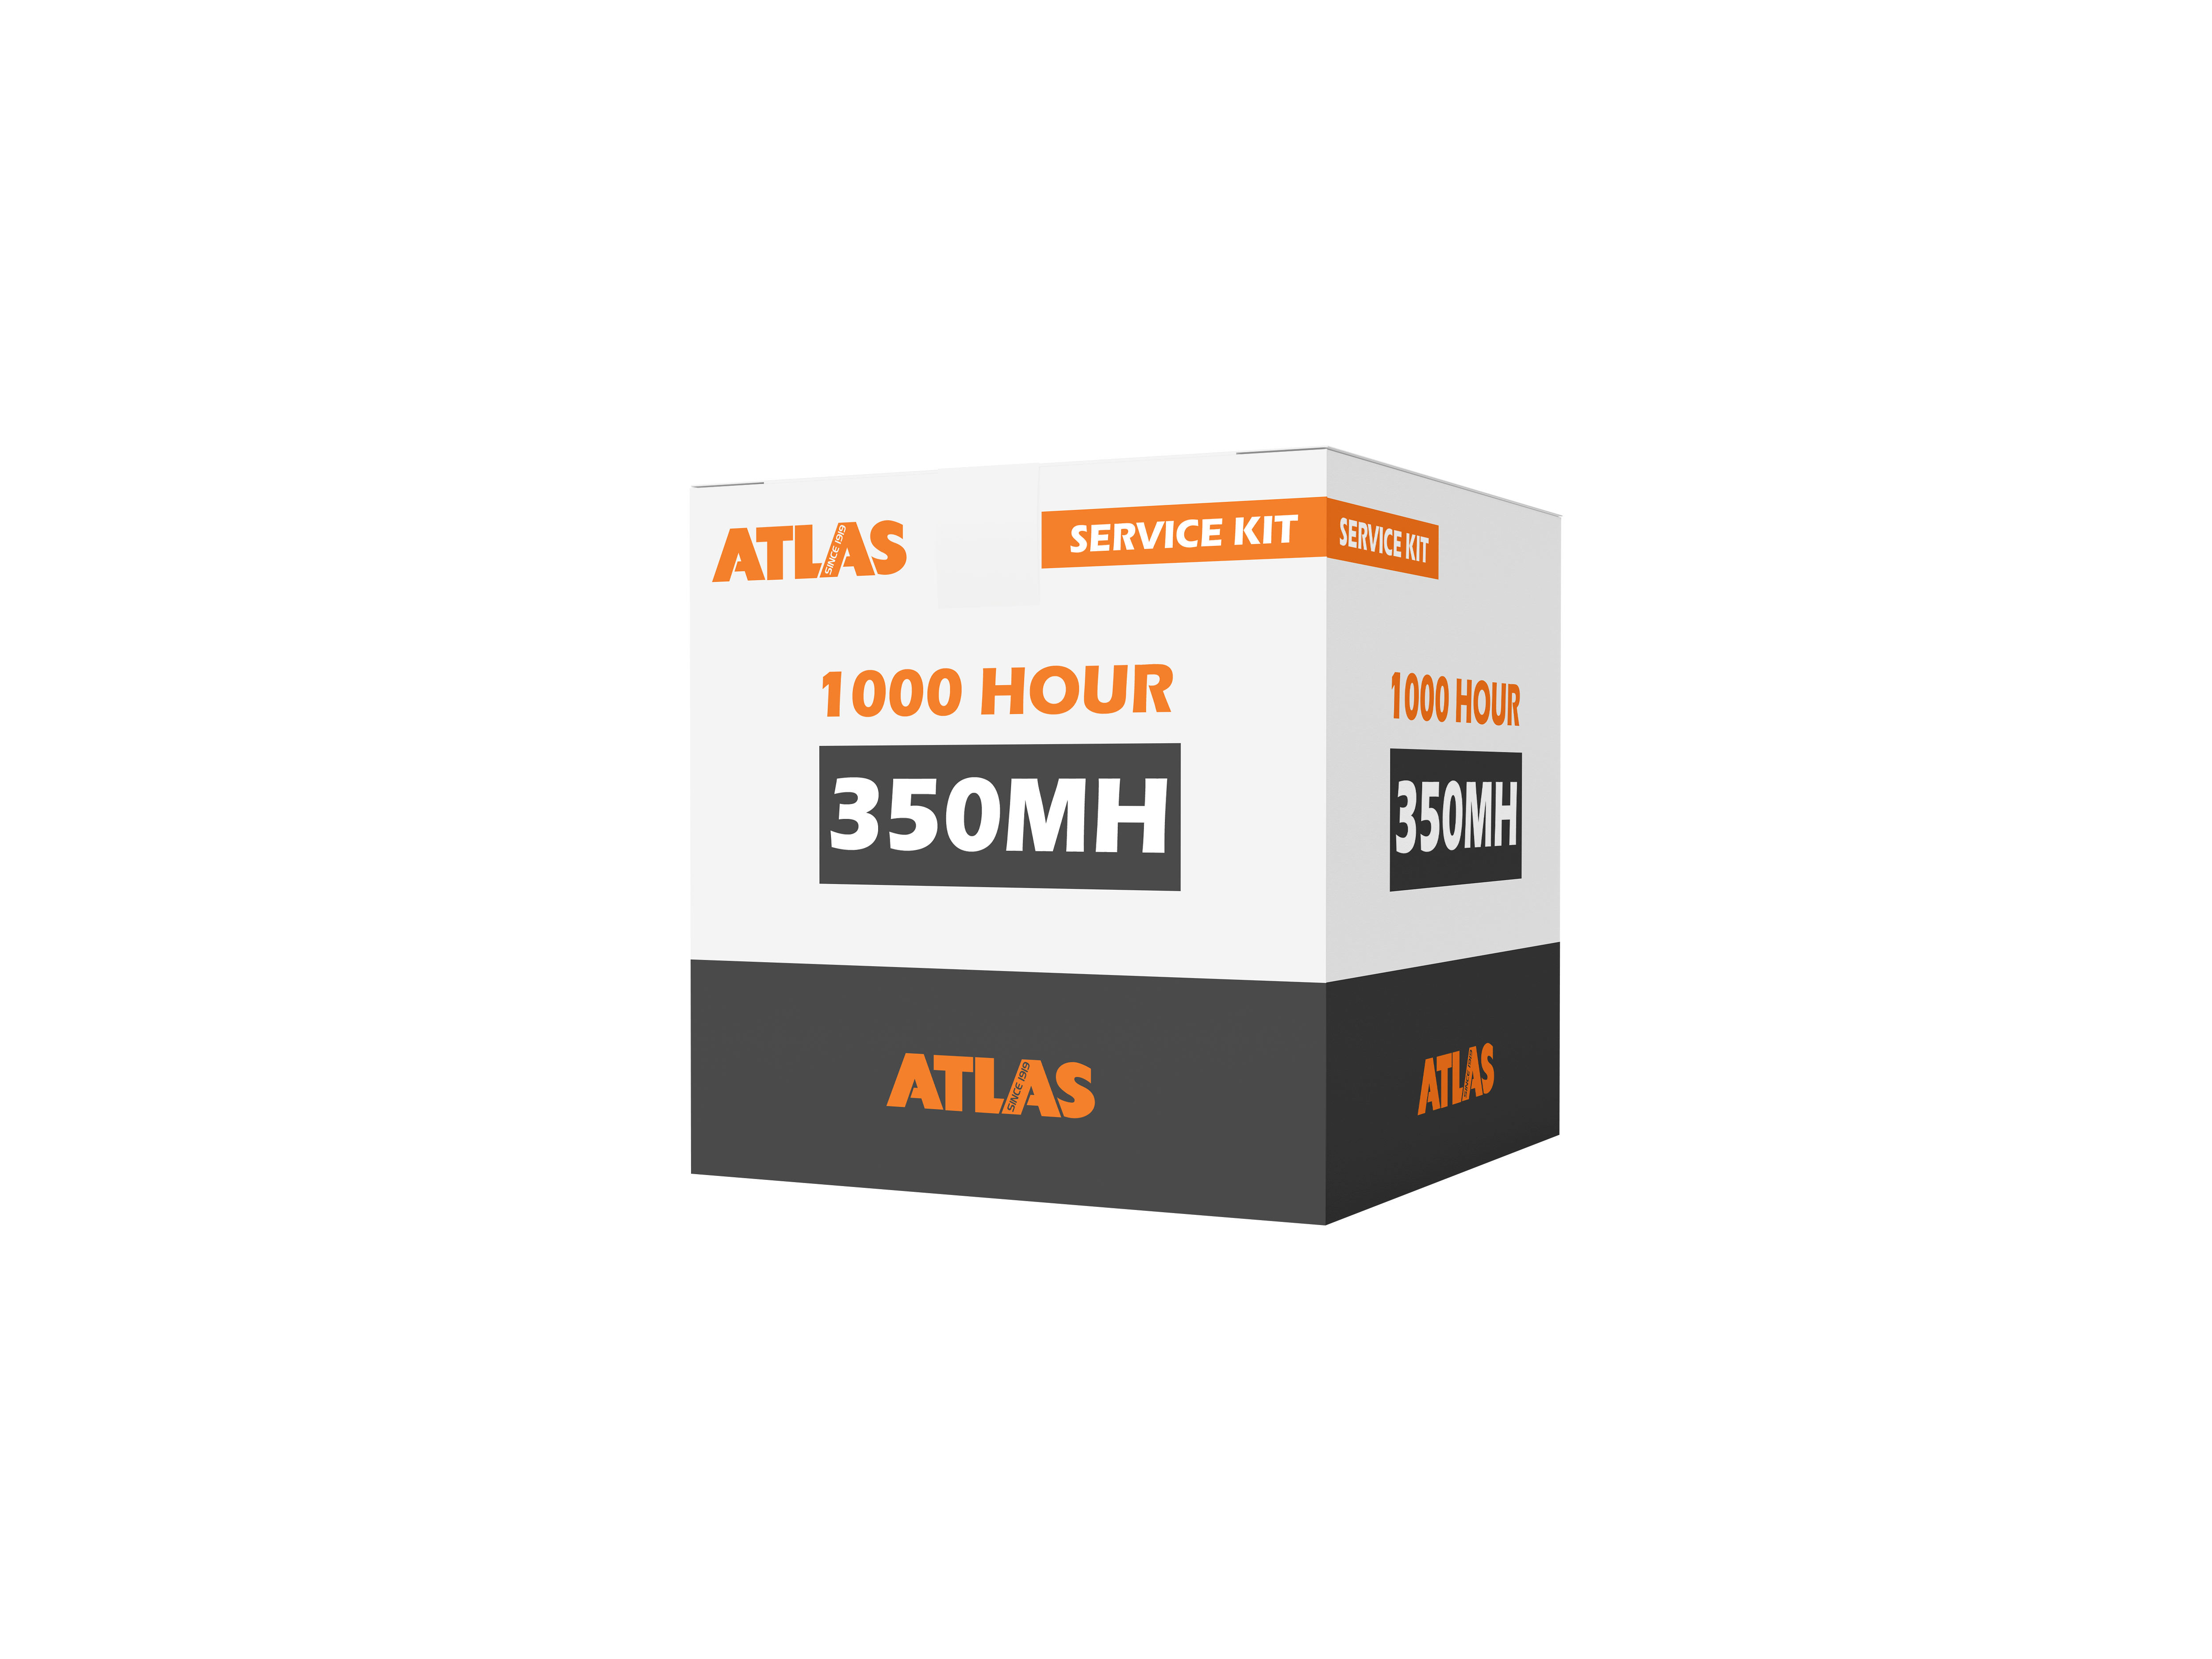 Atlas 350MH 1000 Hour Service Kit (352 series)